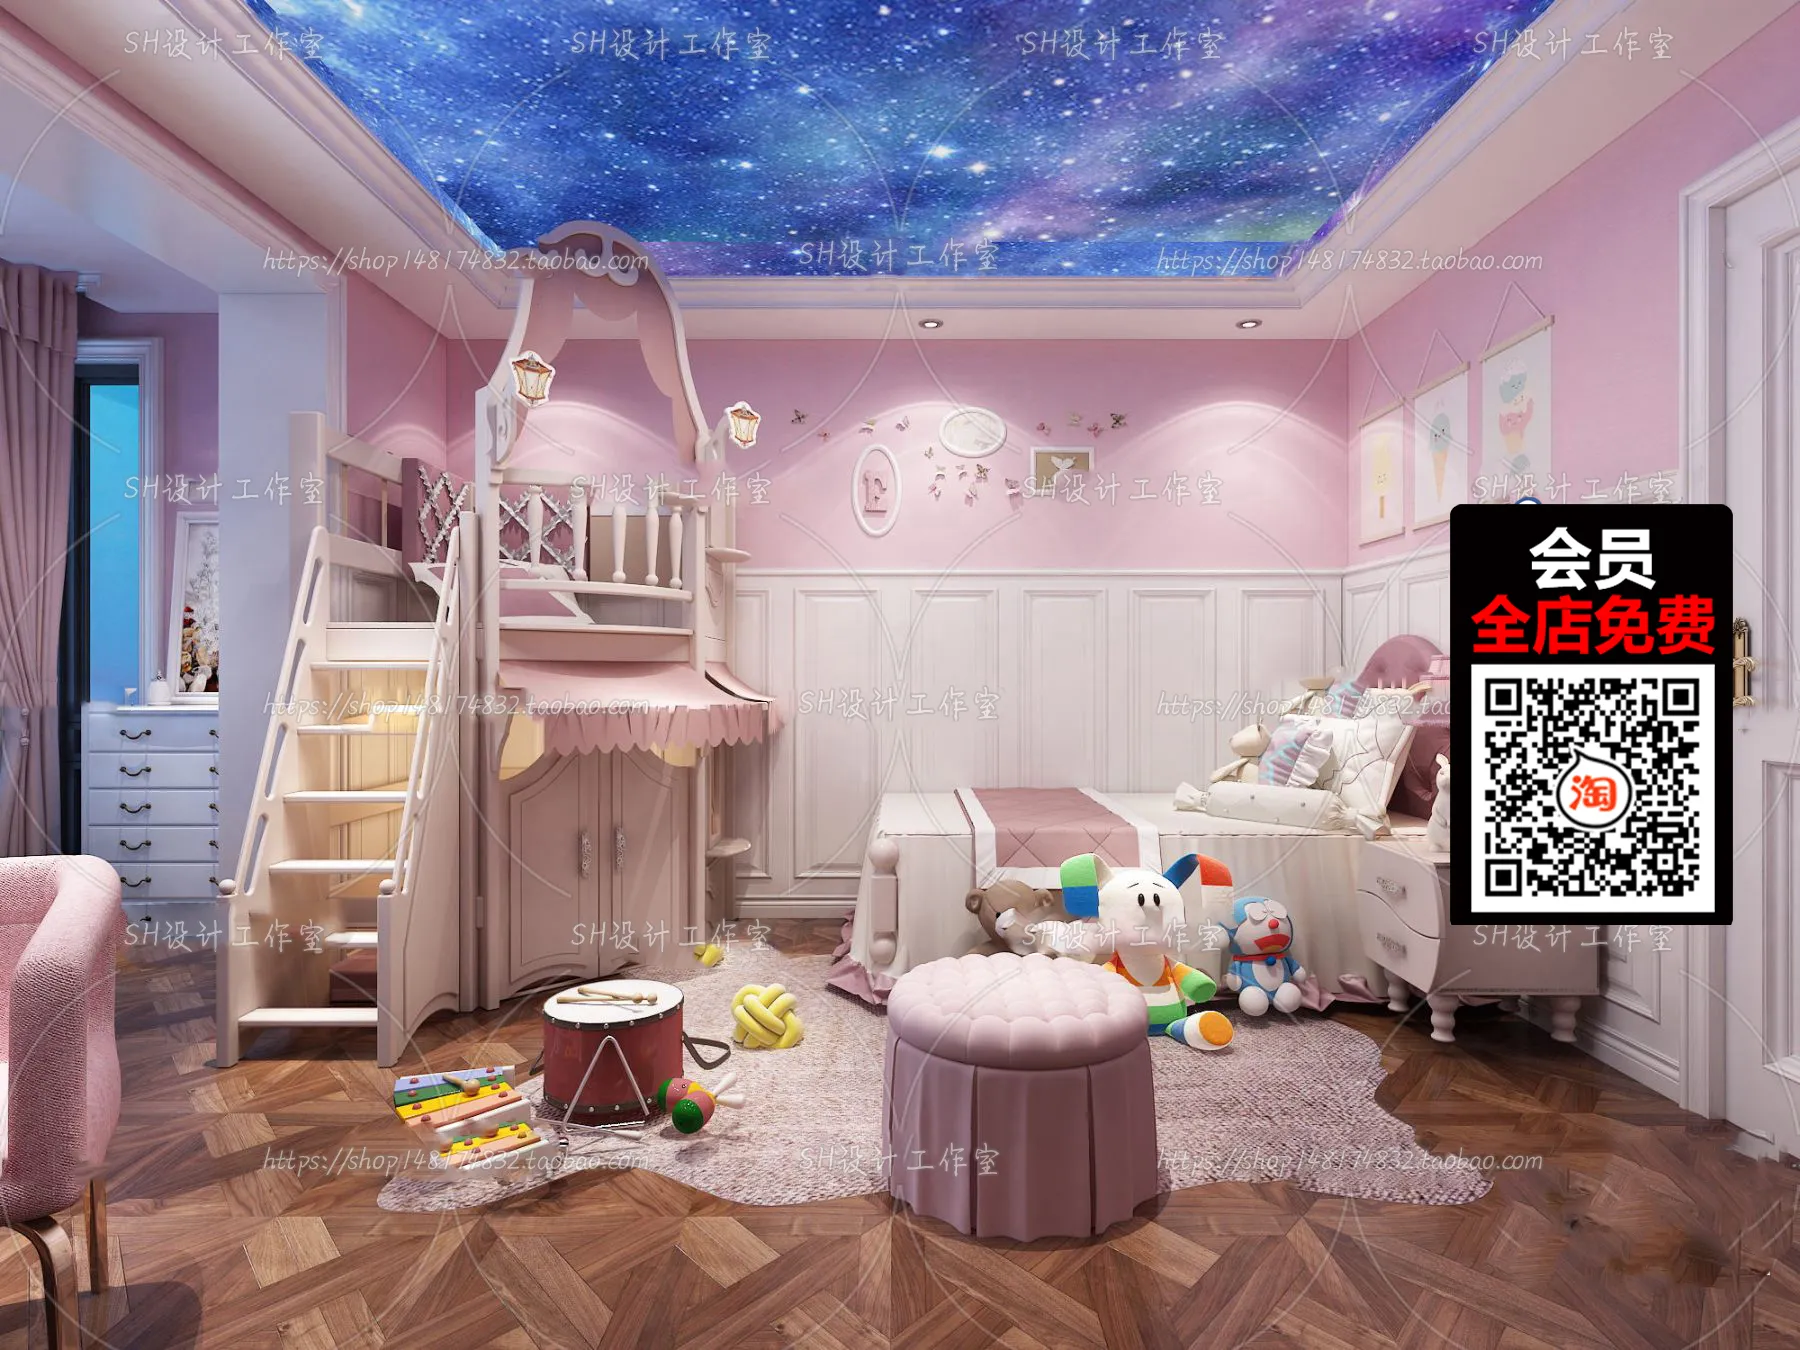 CHILDROOM – 3D SCENES – VRAY – 021